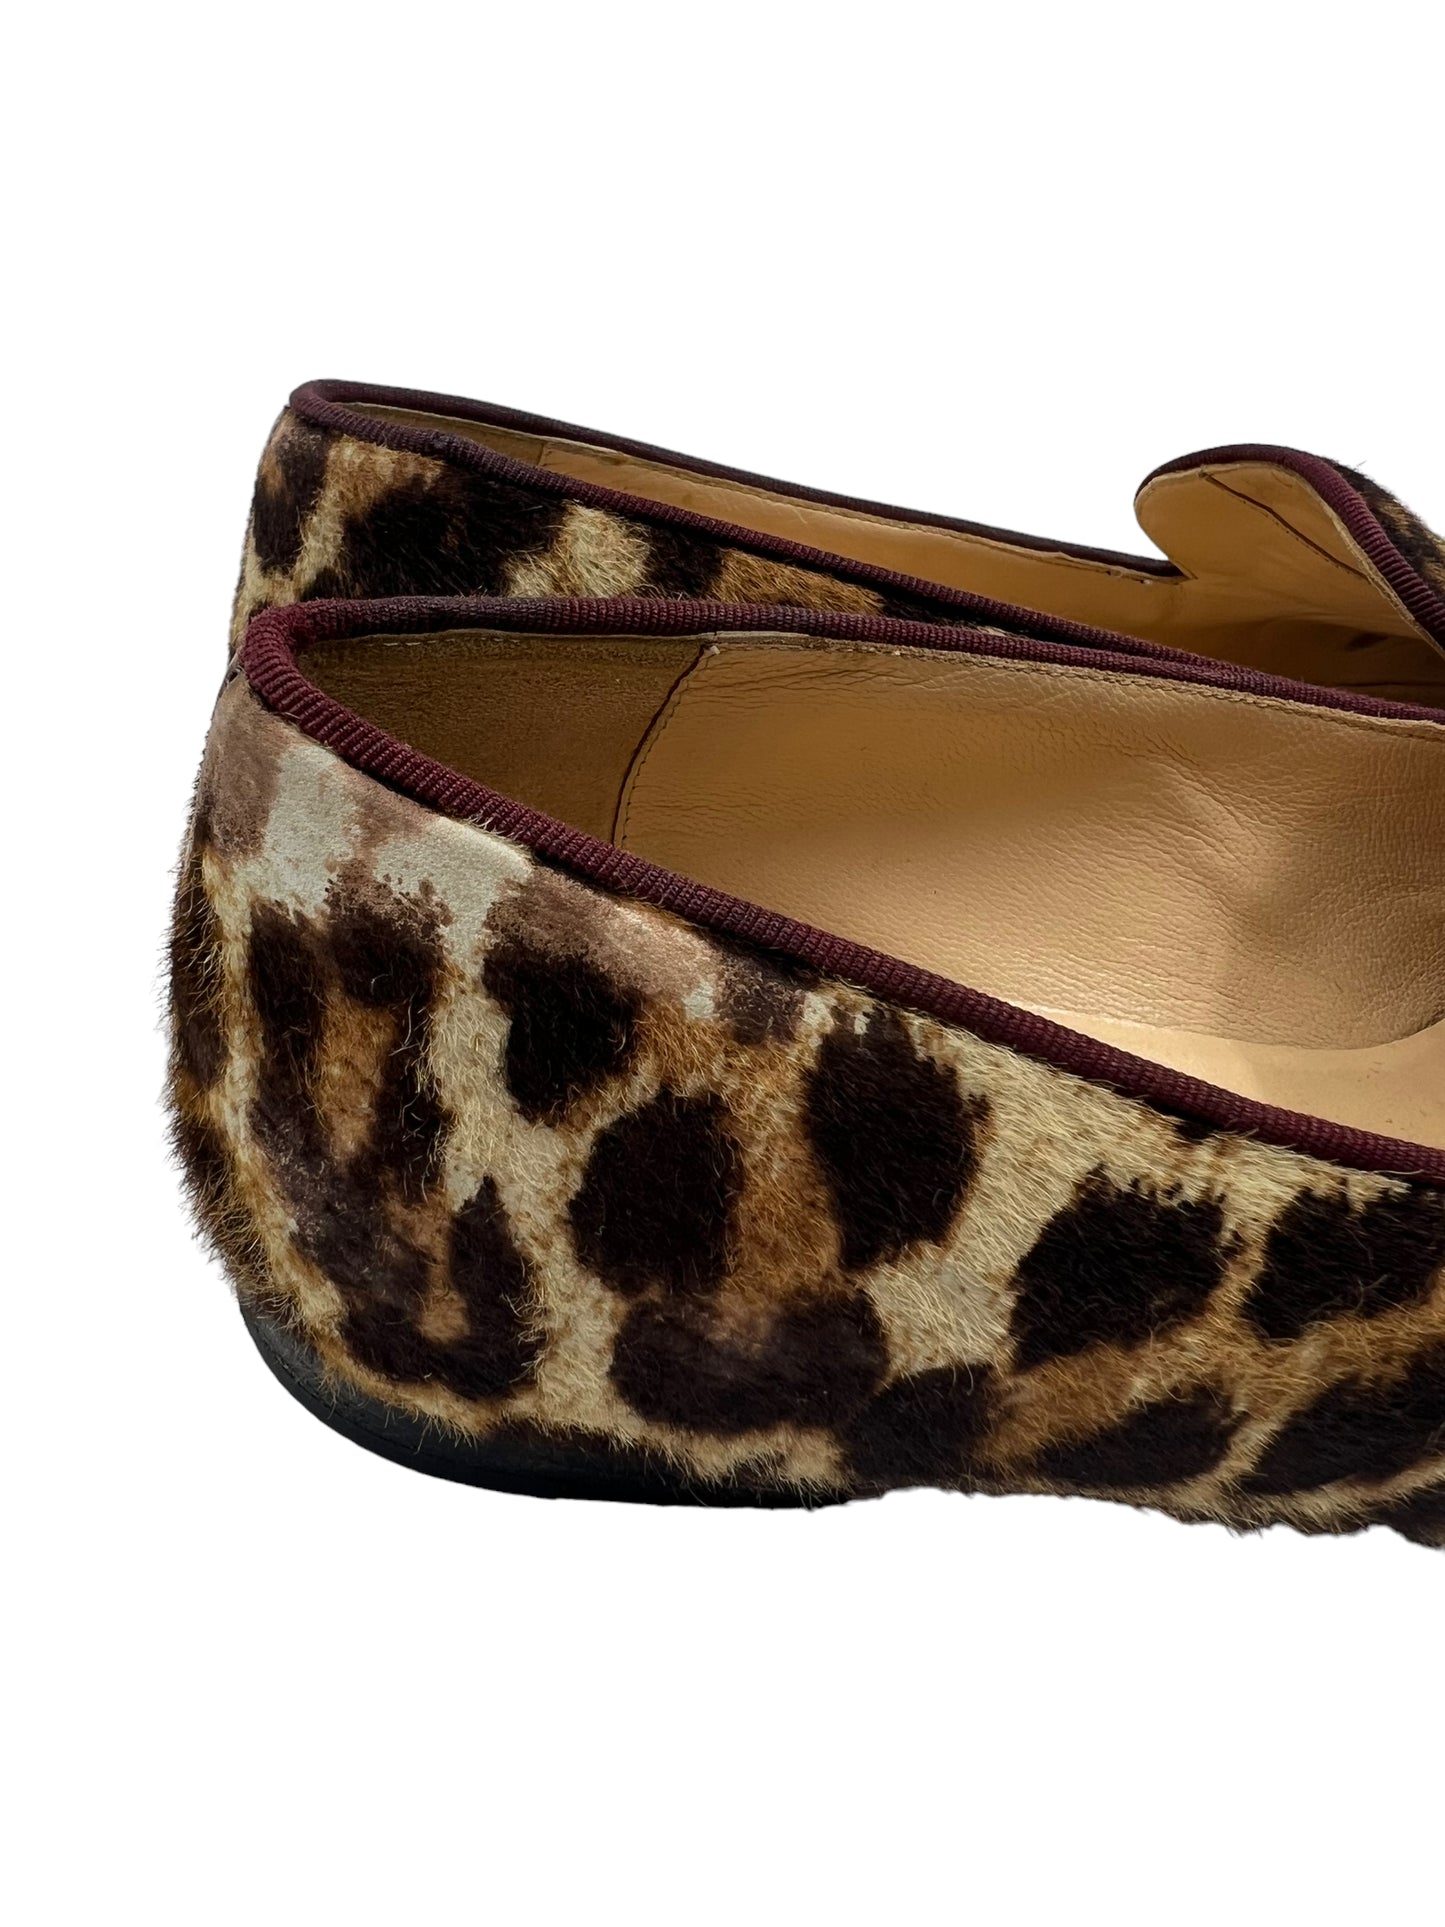 Christian Louboutin 'I Love My Loubies' Size 39.5 Leopard Print Loafers